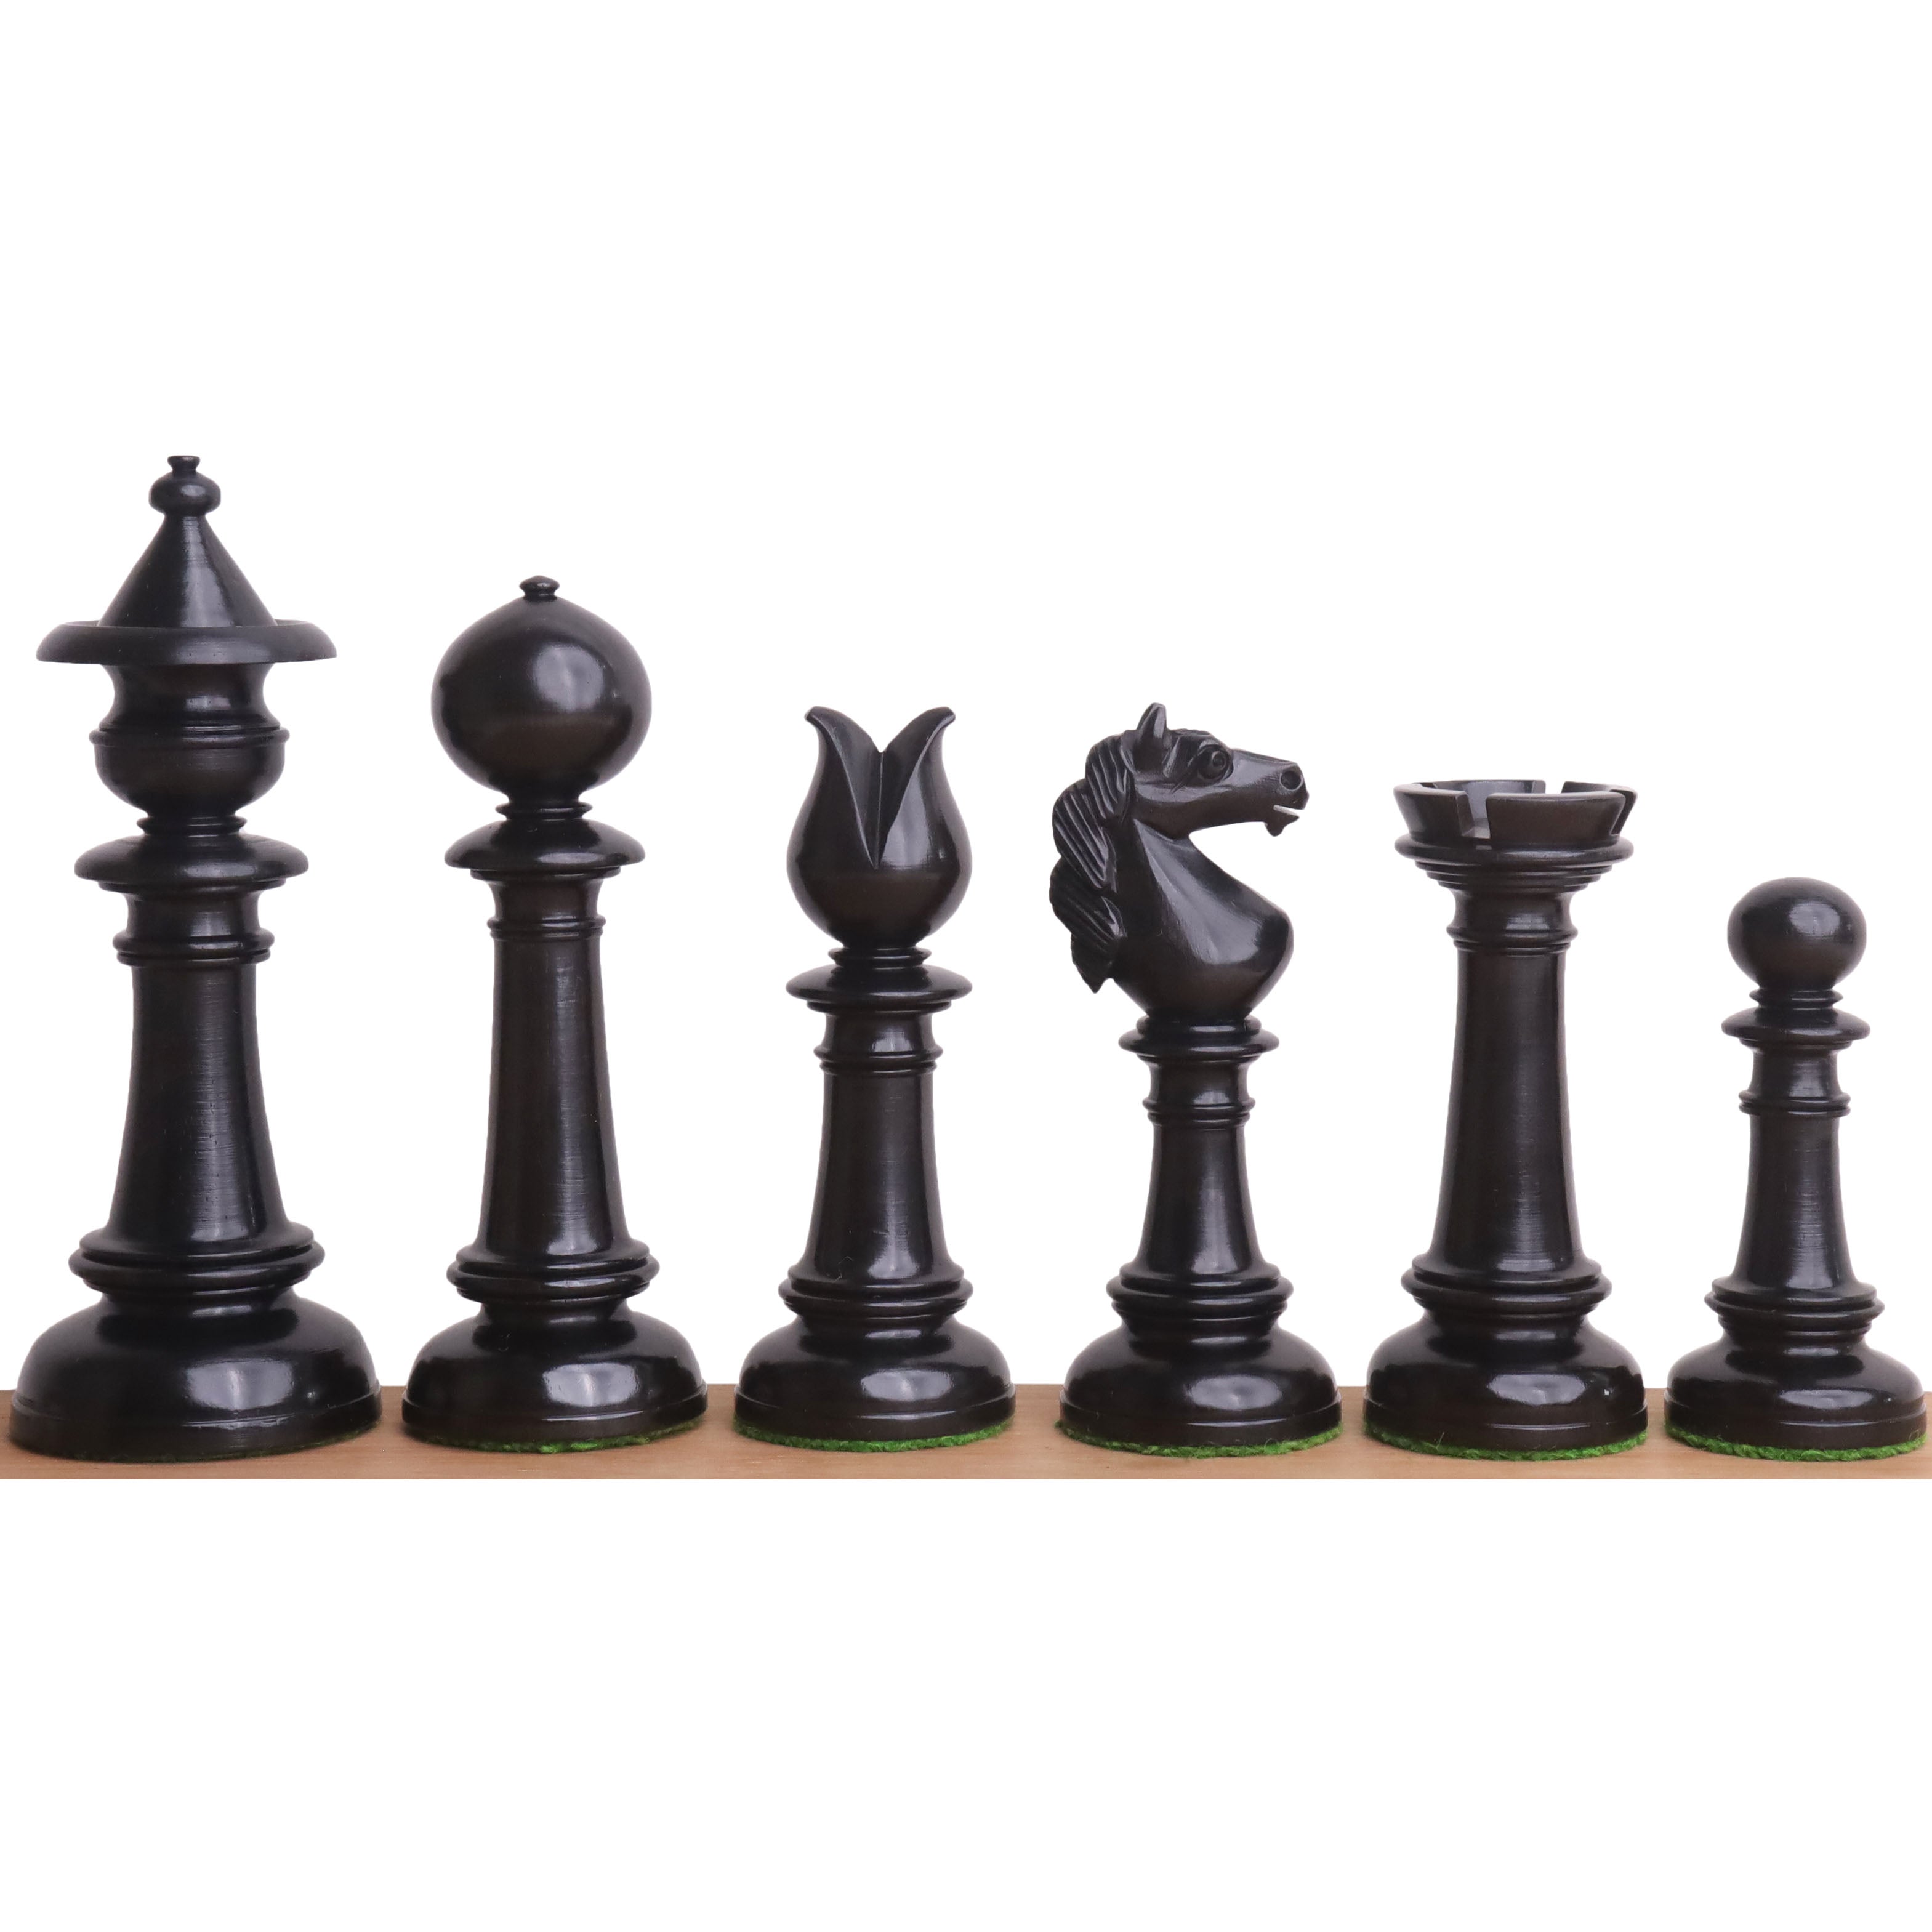 Slightly Imperfect 4" Edinburgh Northern Upright Pre-Staunton Chess Pieces Only set - Ebony Wood